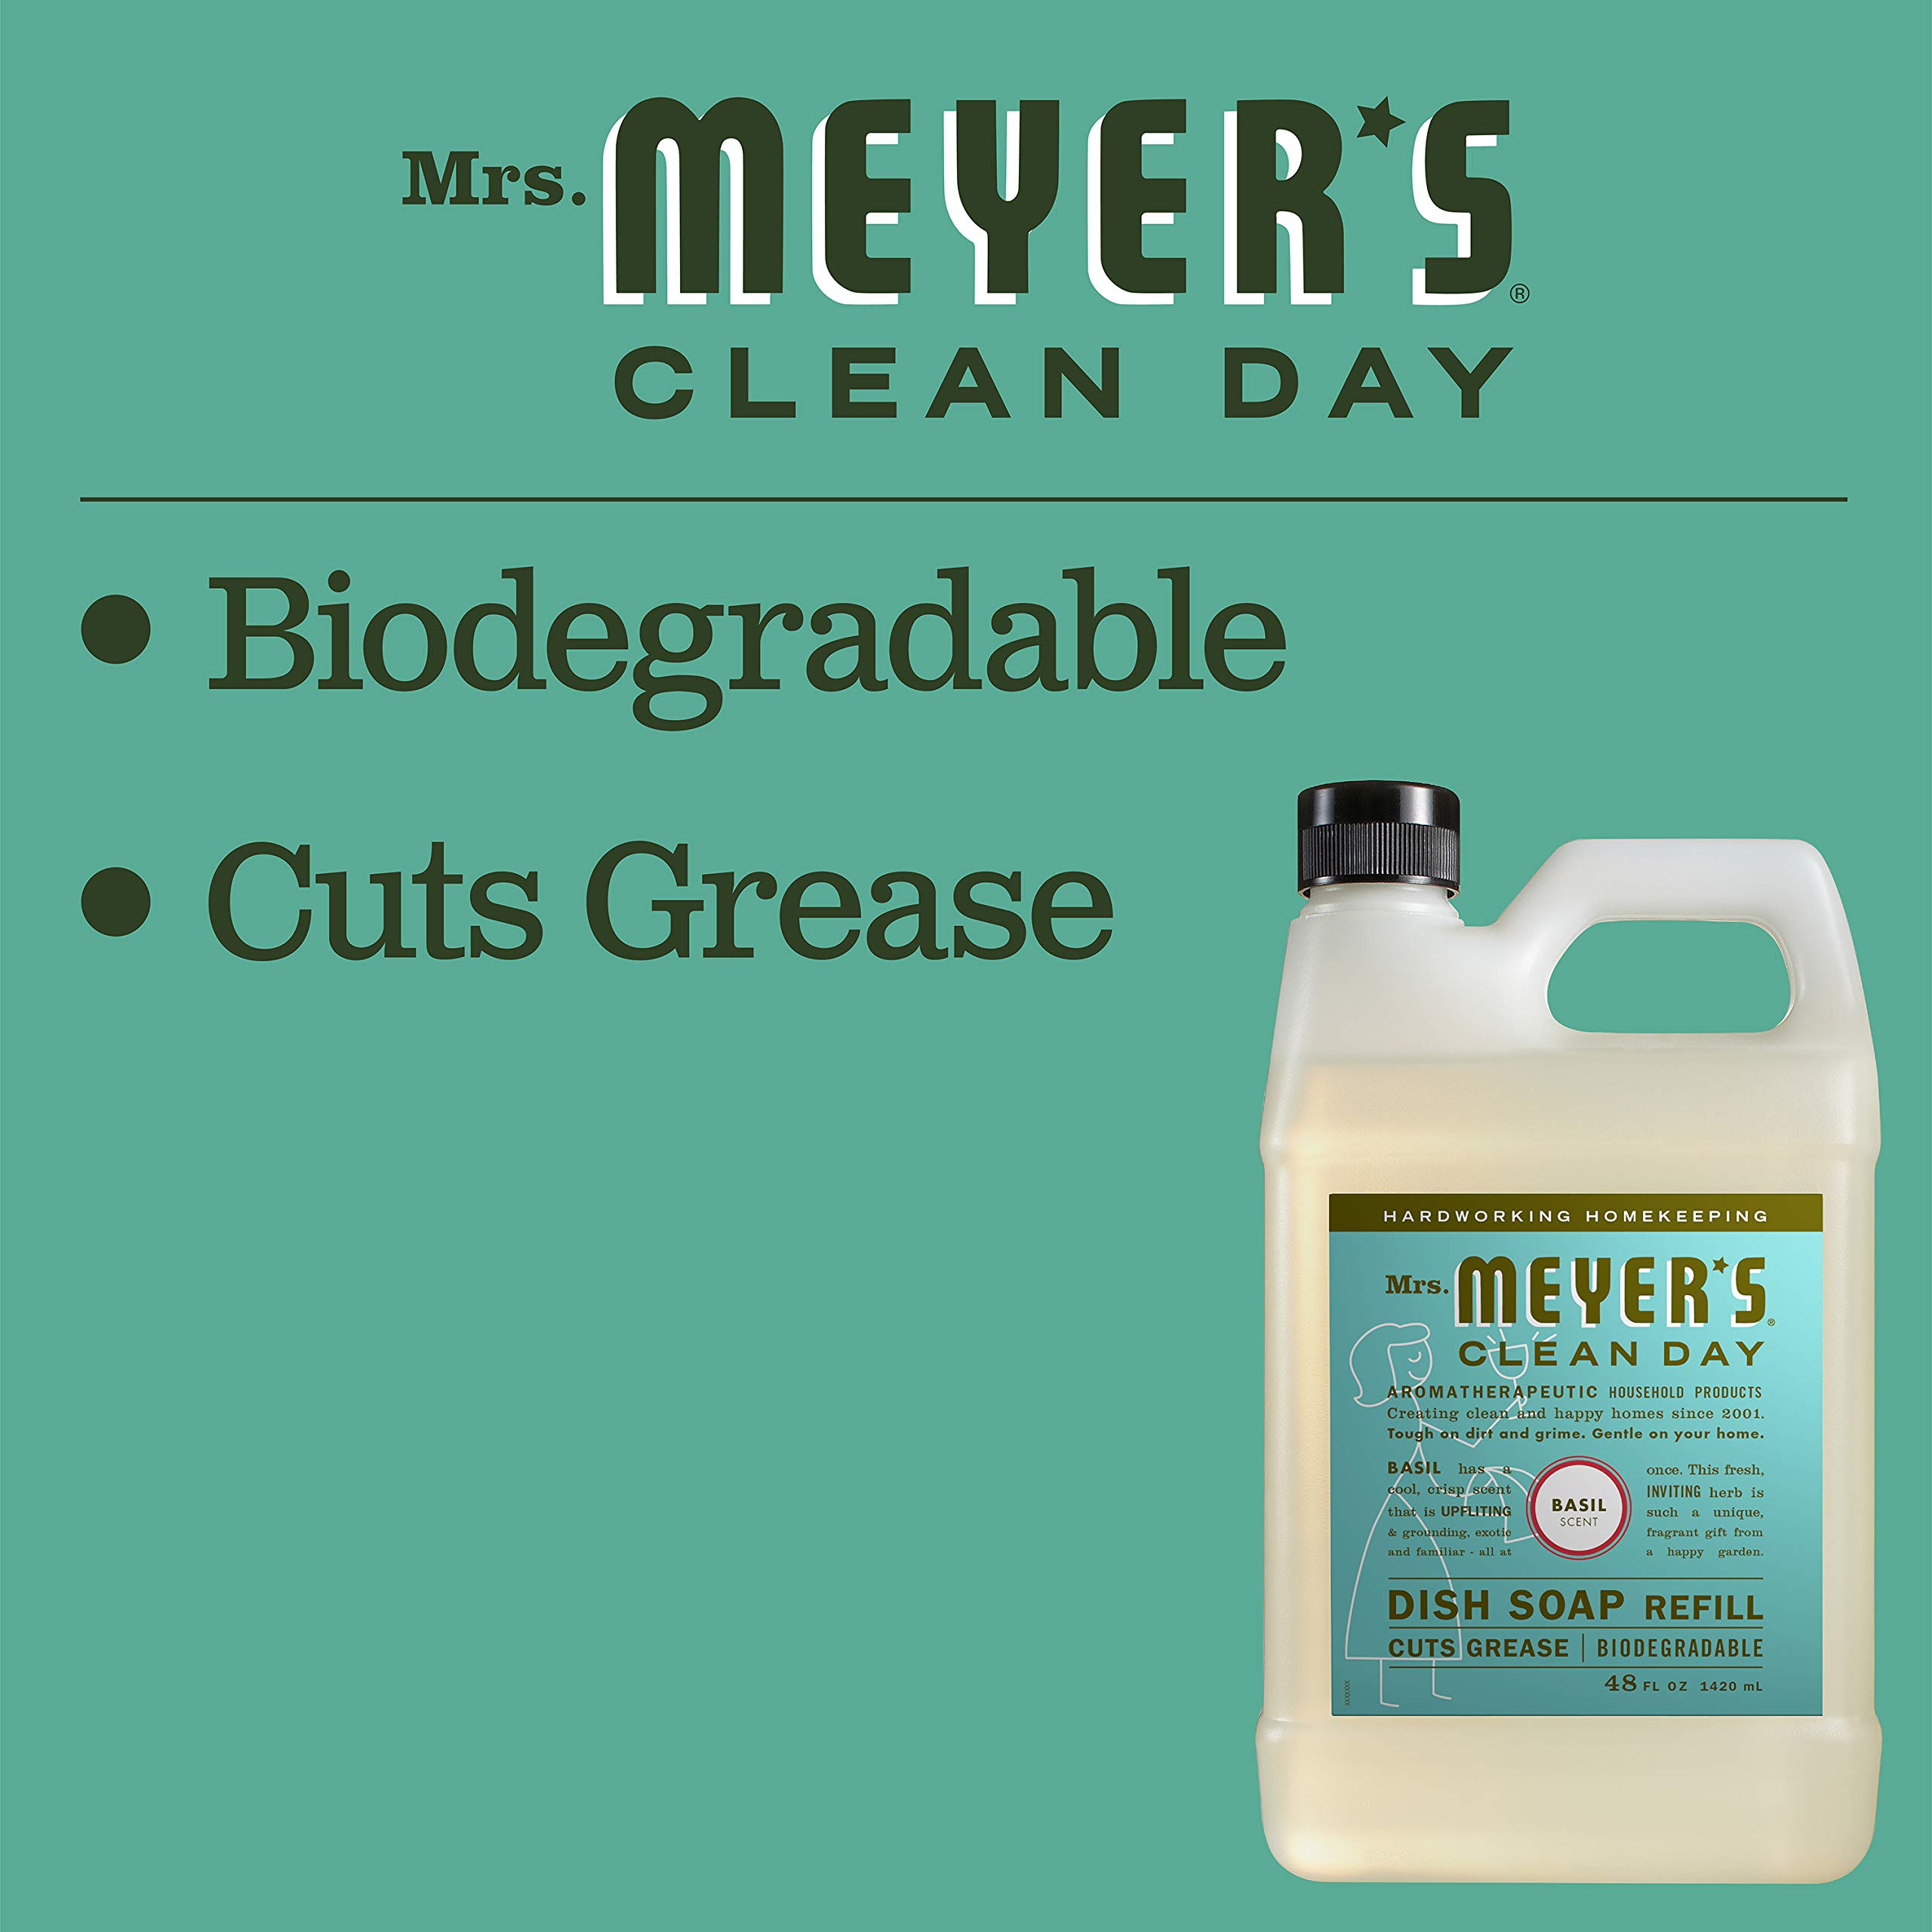 Mrs. Meyer's Liquid Dish Soap Refill, Biodegradable Formula, Basil, 48 fl. oz